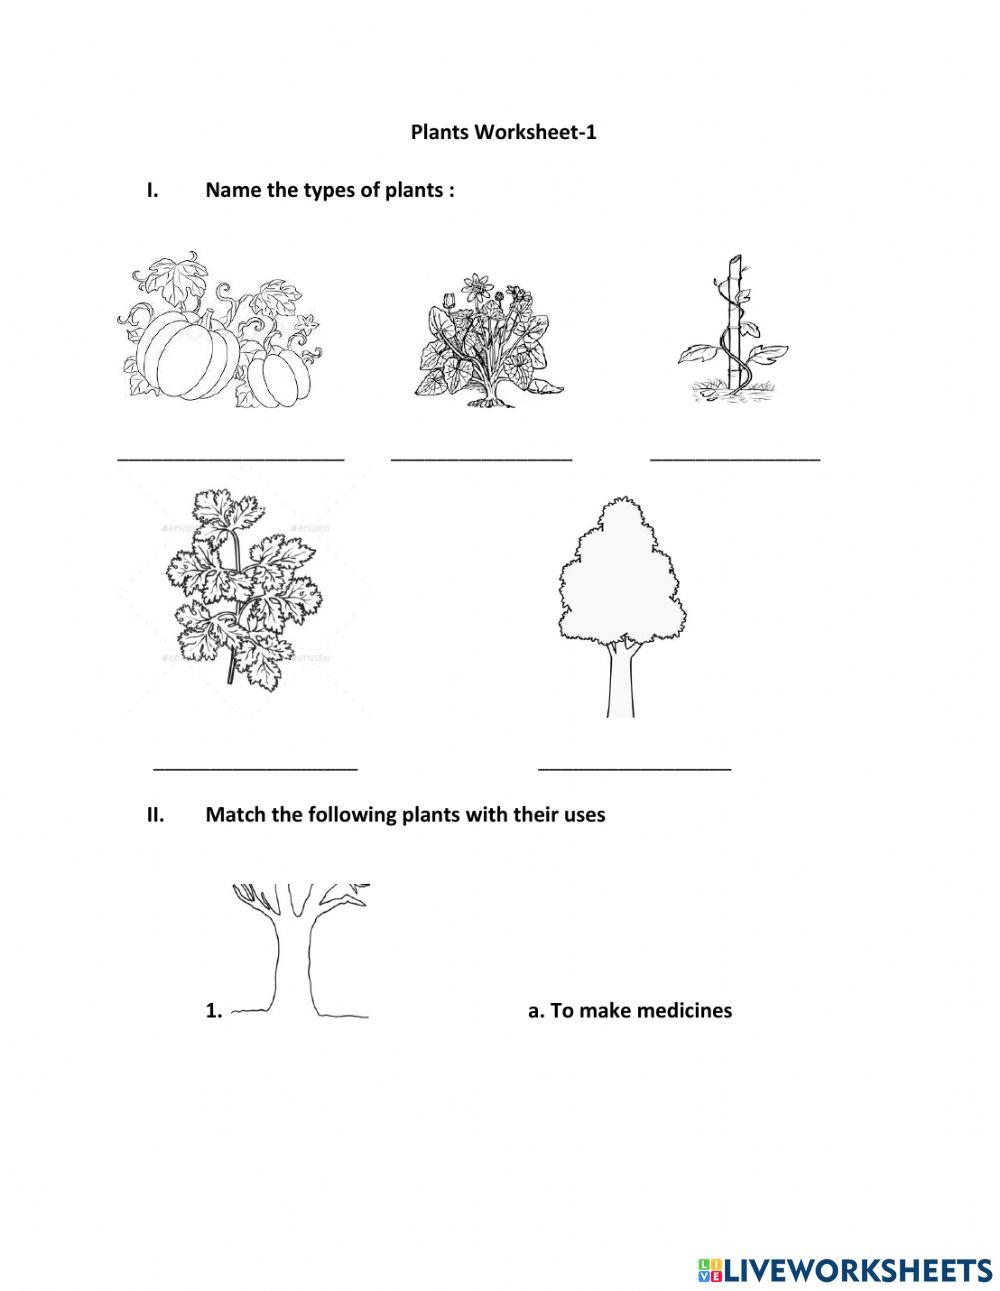 Plants worksheet-1